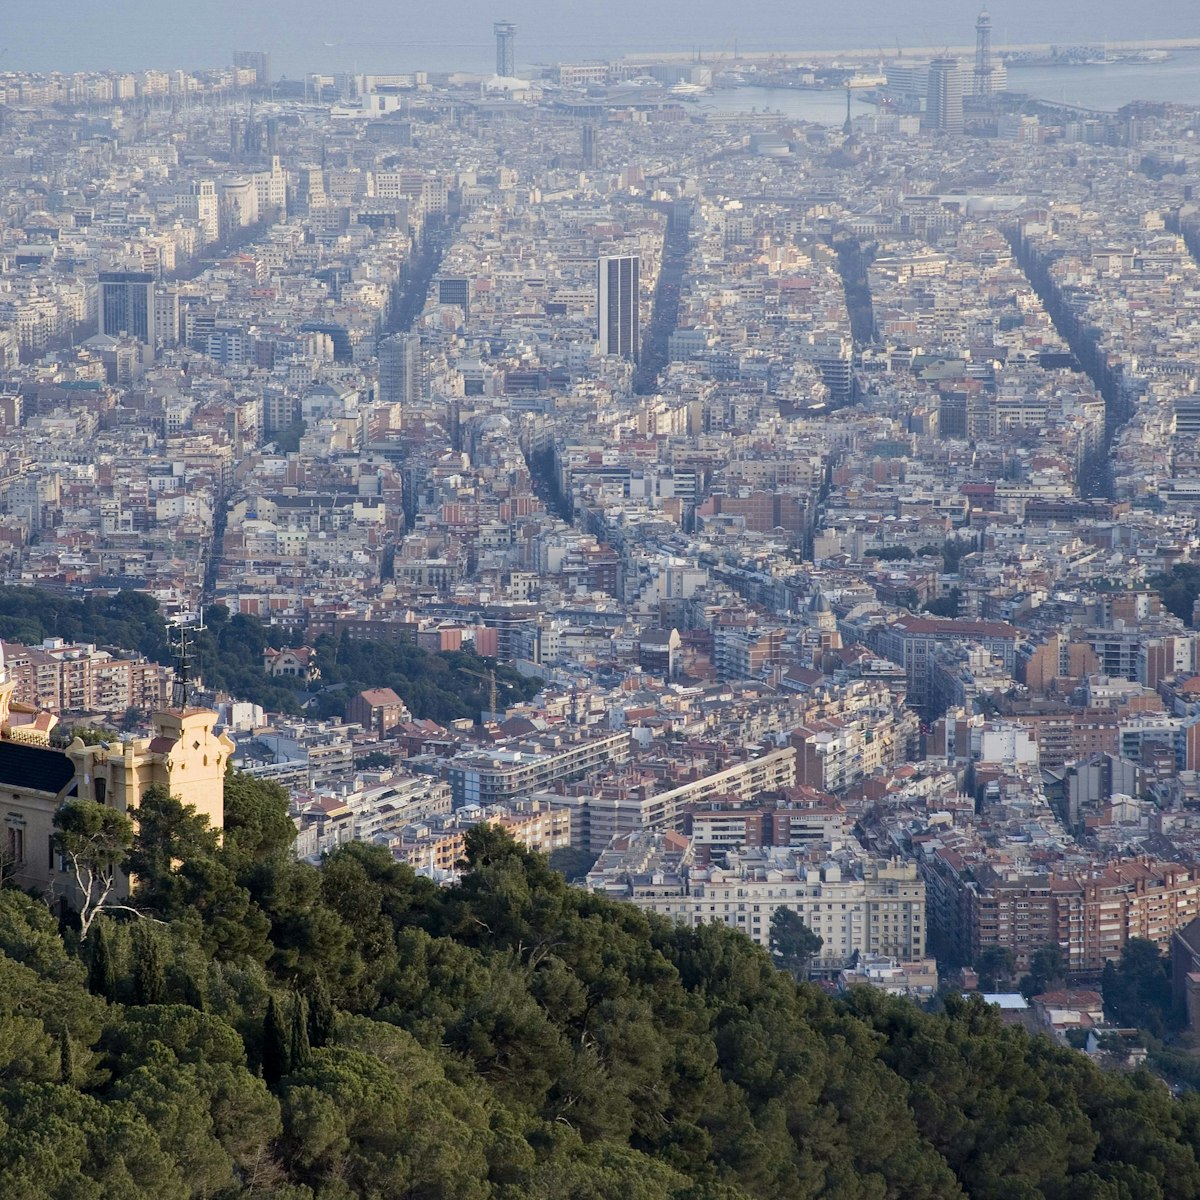 Fabra observatory overlooking city, Barcelona, Spain